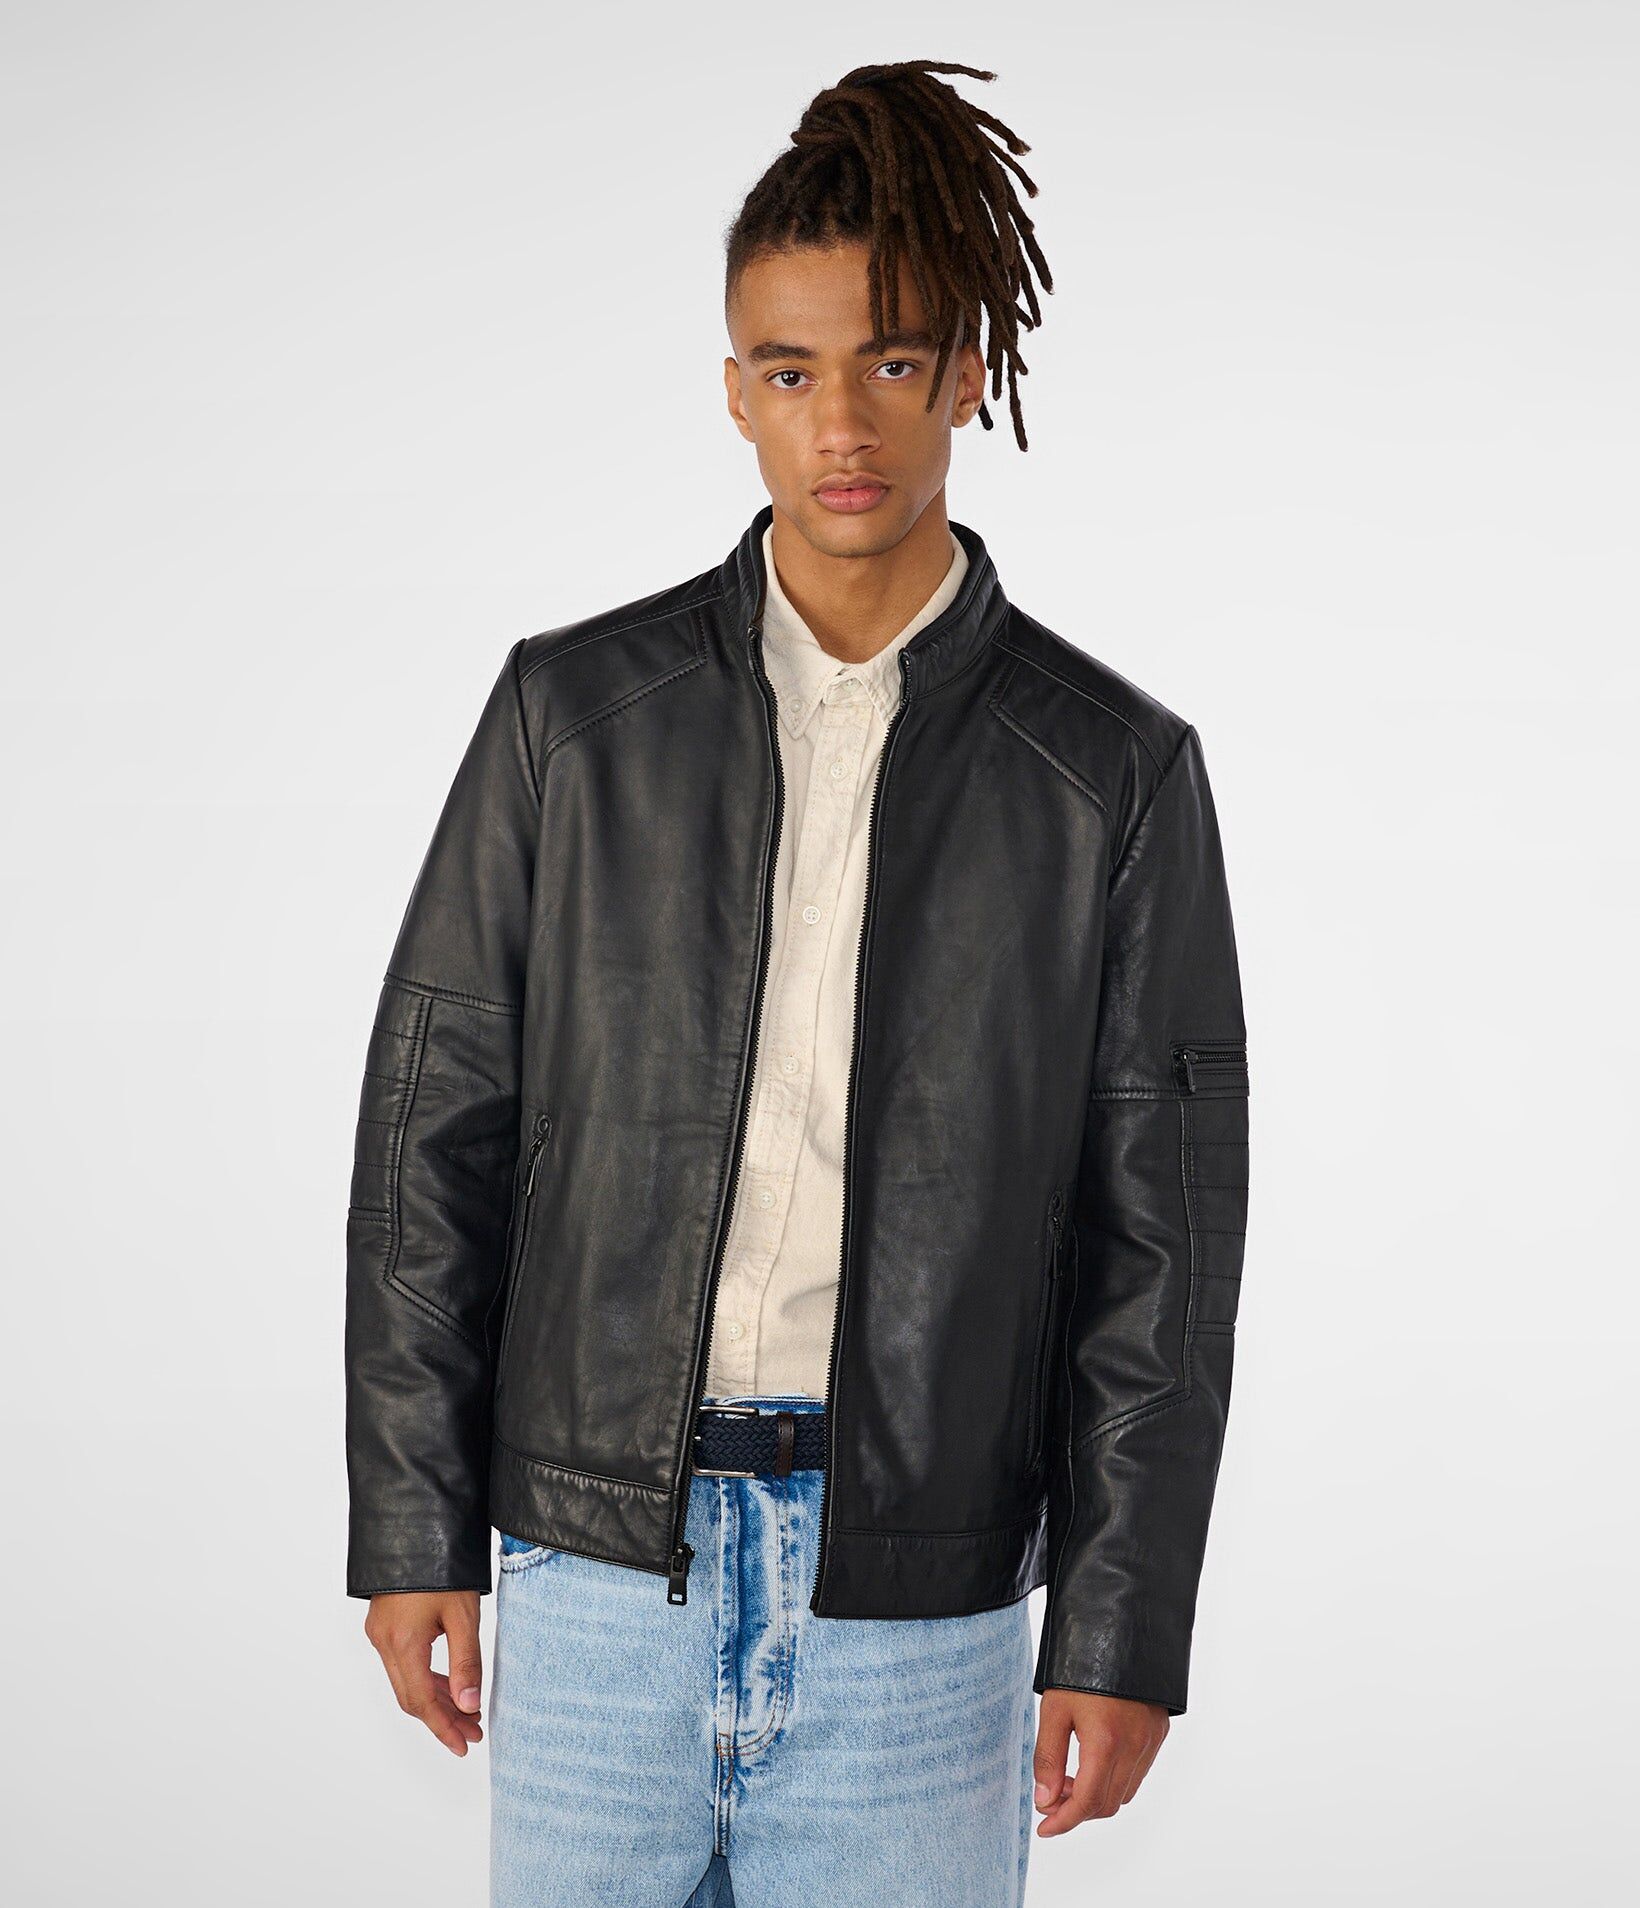 Wilsons Leather   Men's Toby Leather Jacket   Black   Large